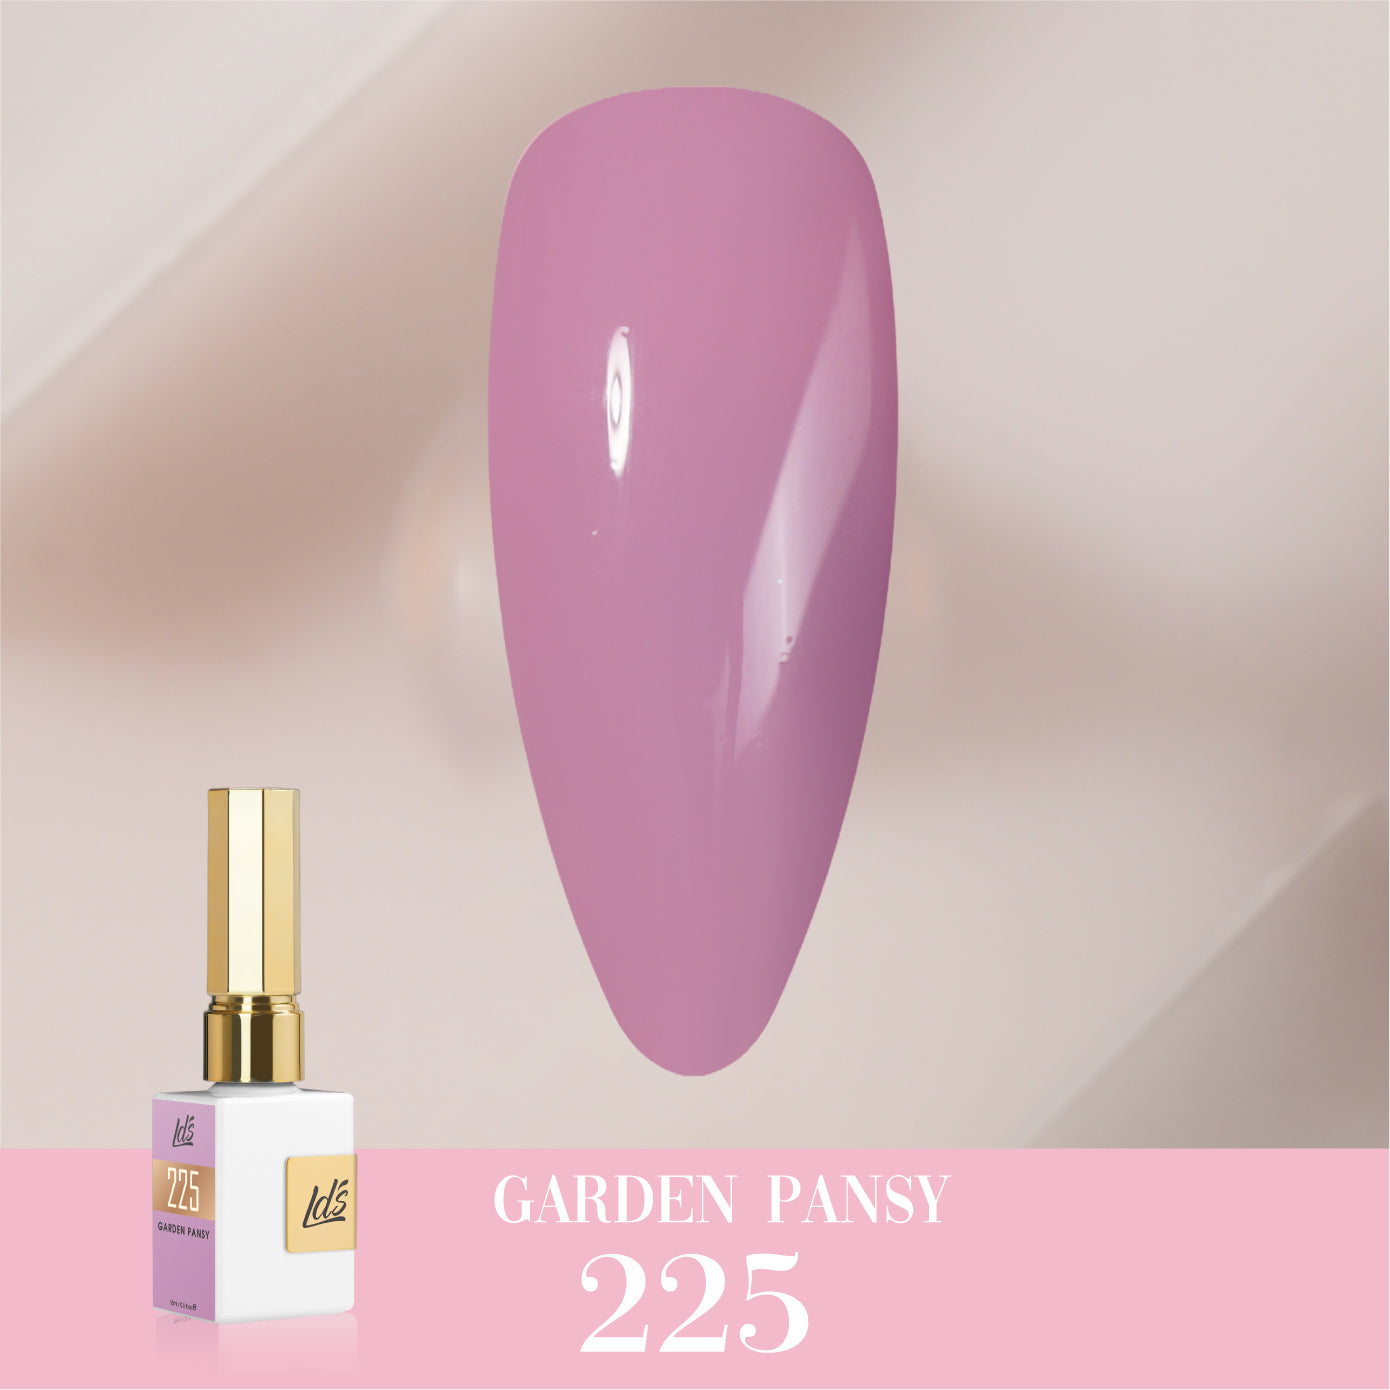 LDS Color Craze Collection - 225 Garden Pansy - Gel Polish 0.5oz